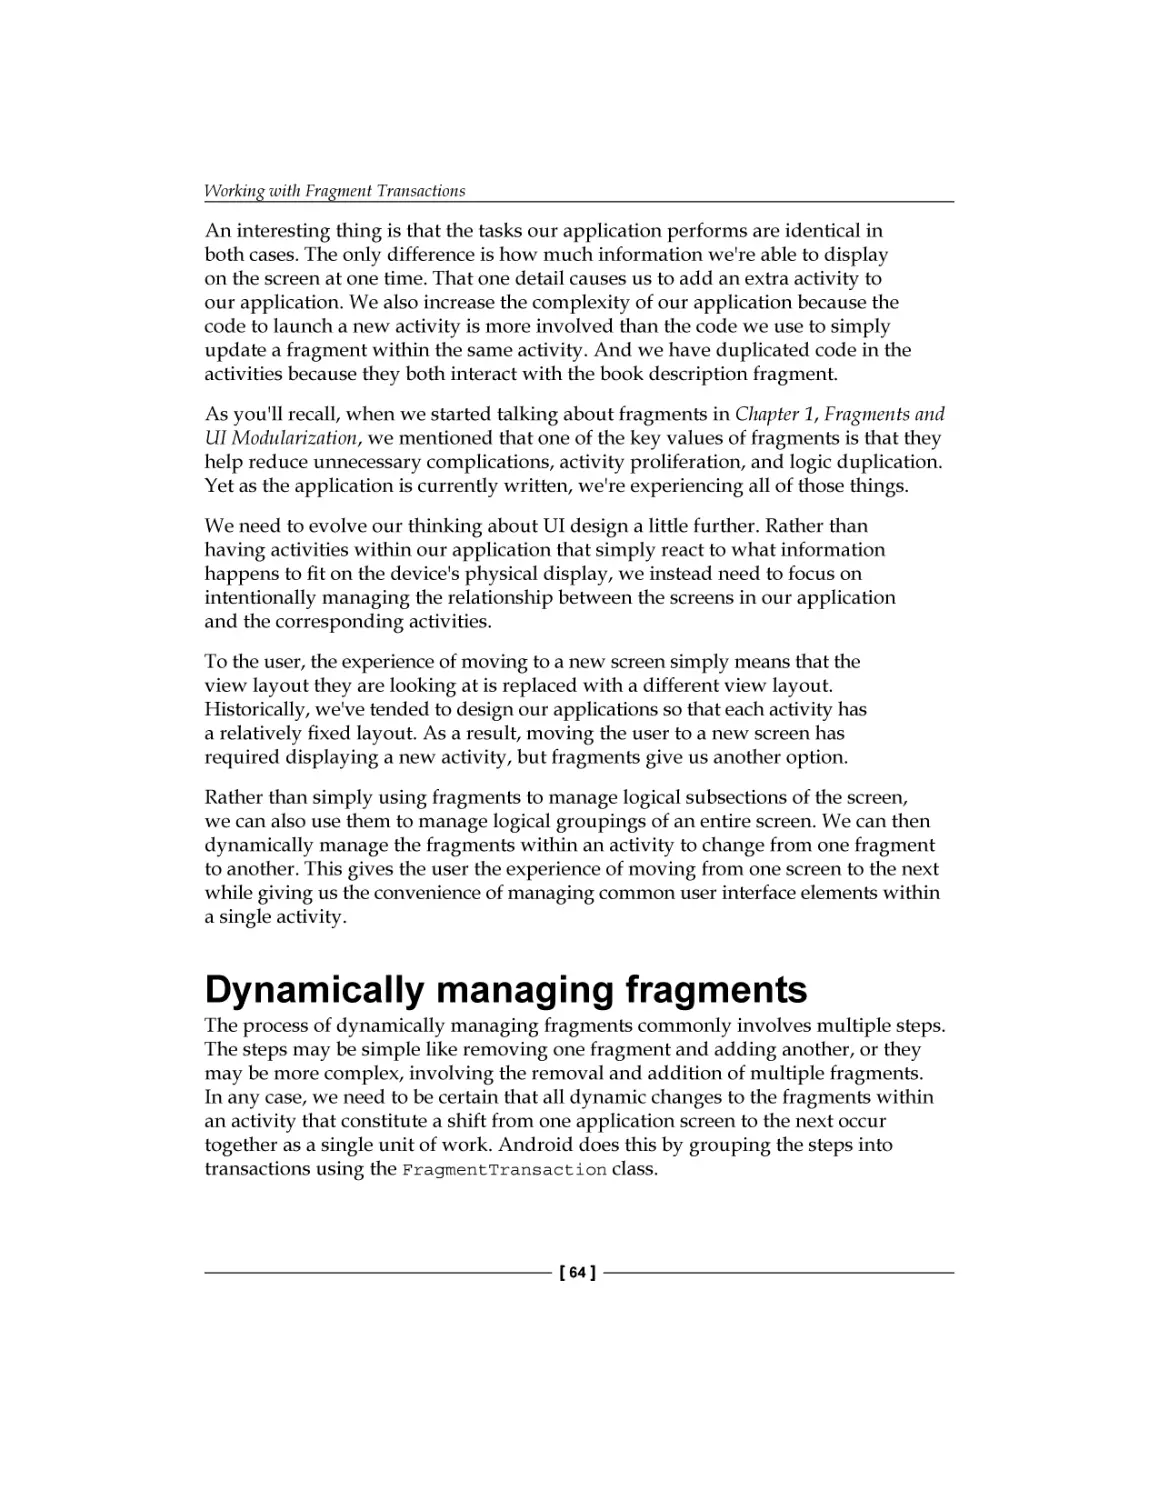 Dynamically managing fragments